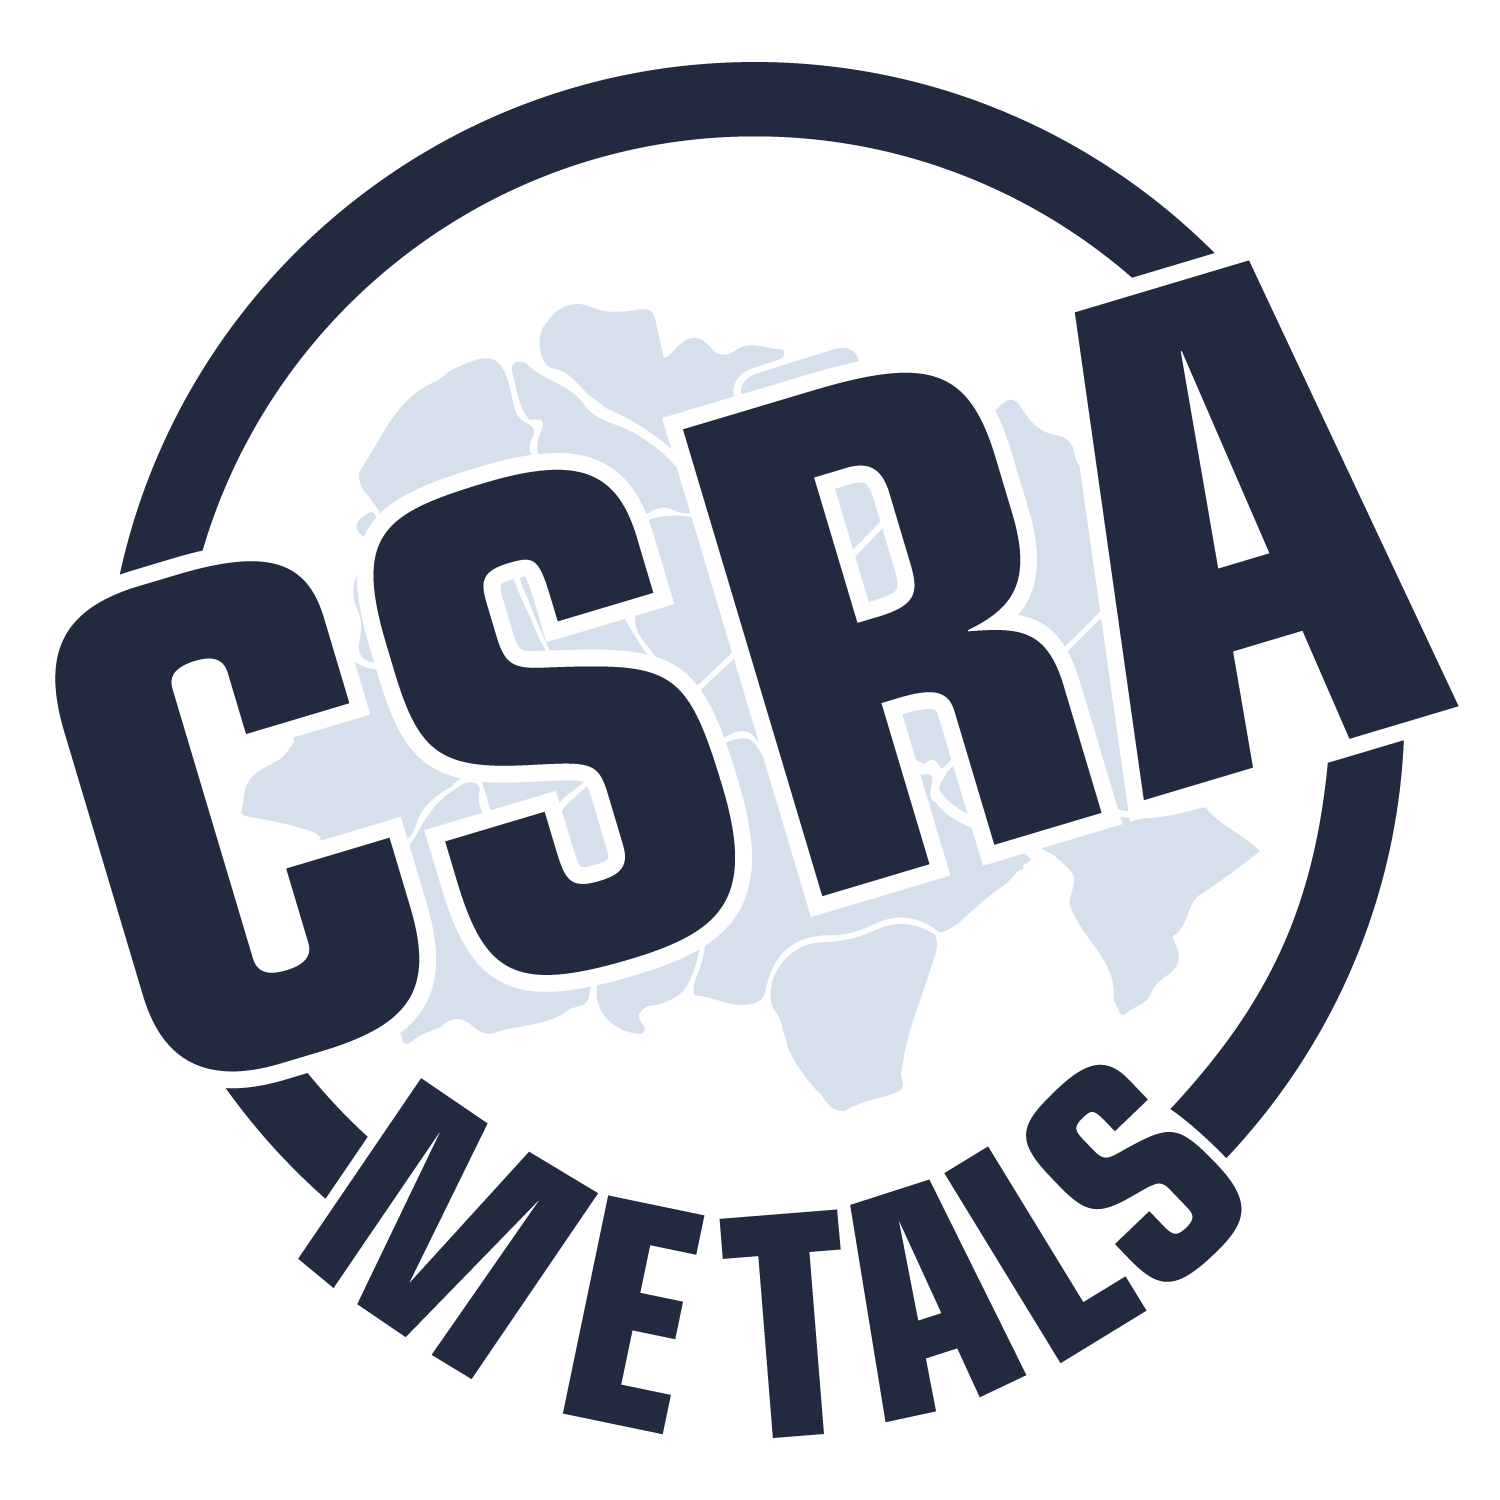 csra metals logo design, greenville logo, contracting company